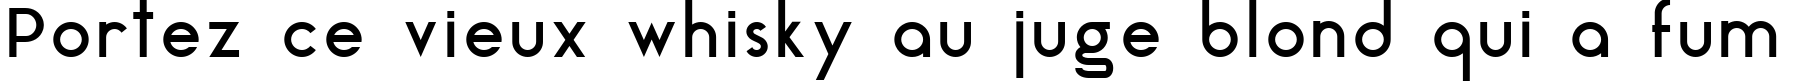 Пример написания шрифтом Aqua Grotesque текста на французском